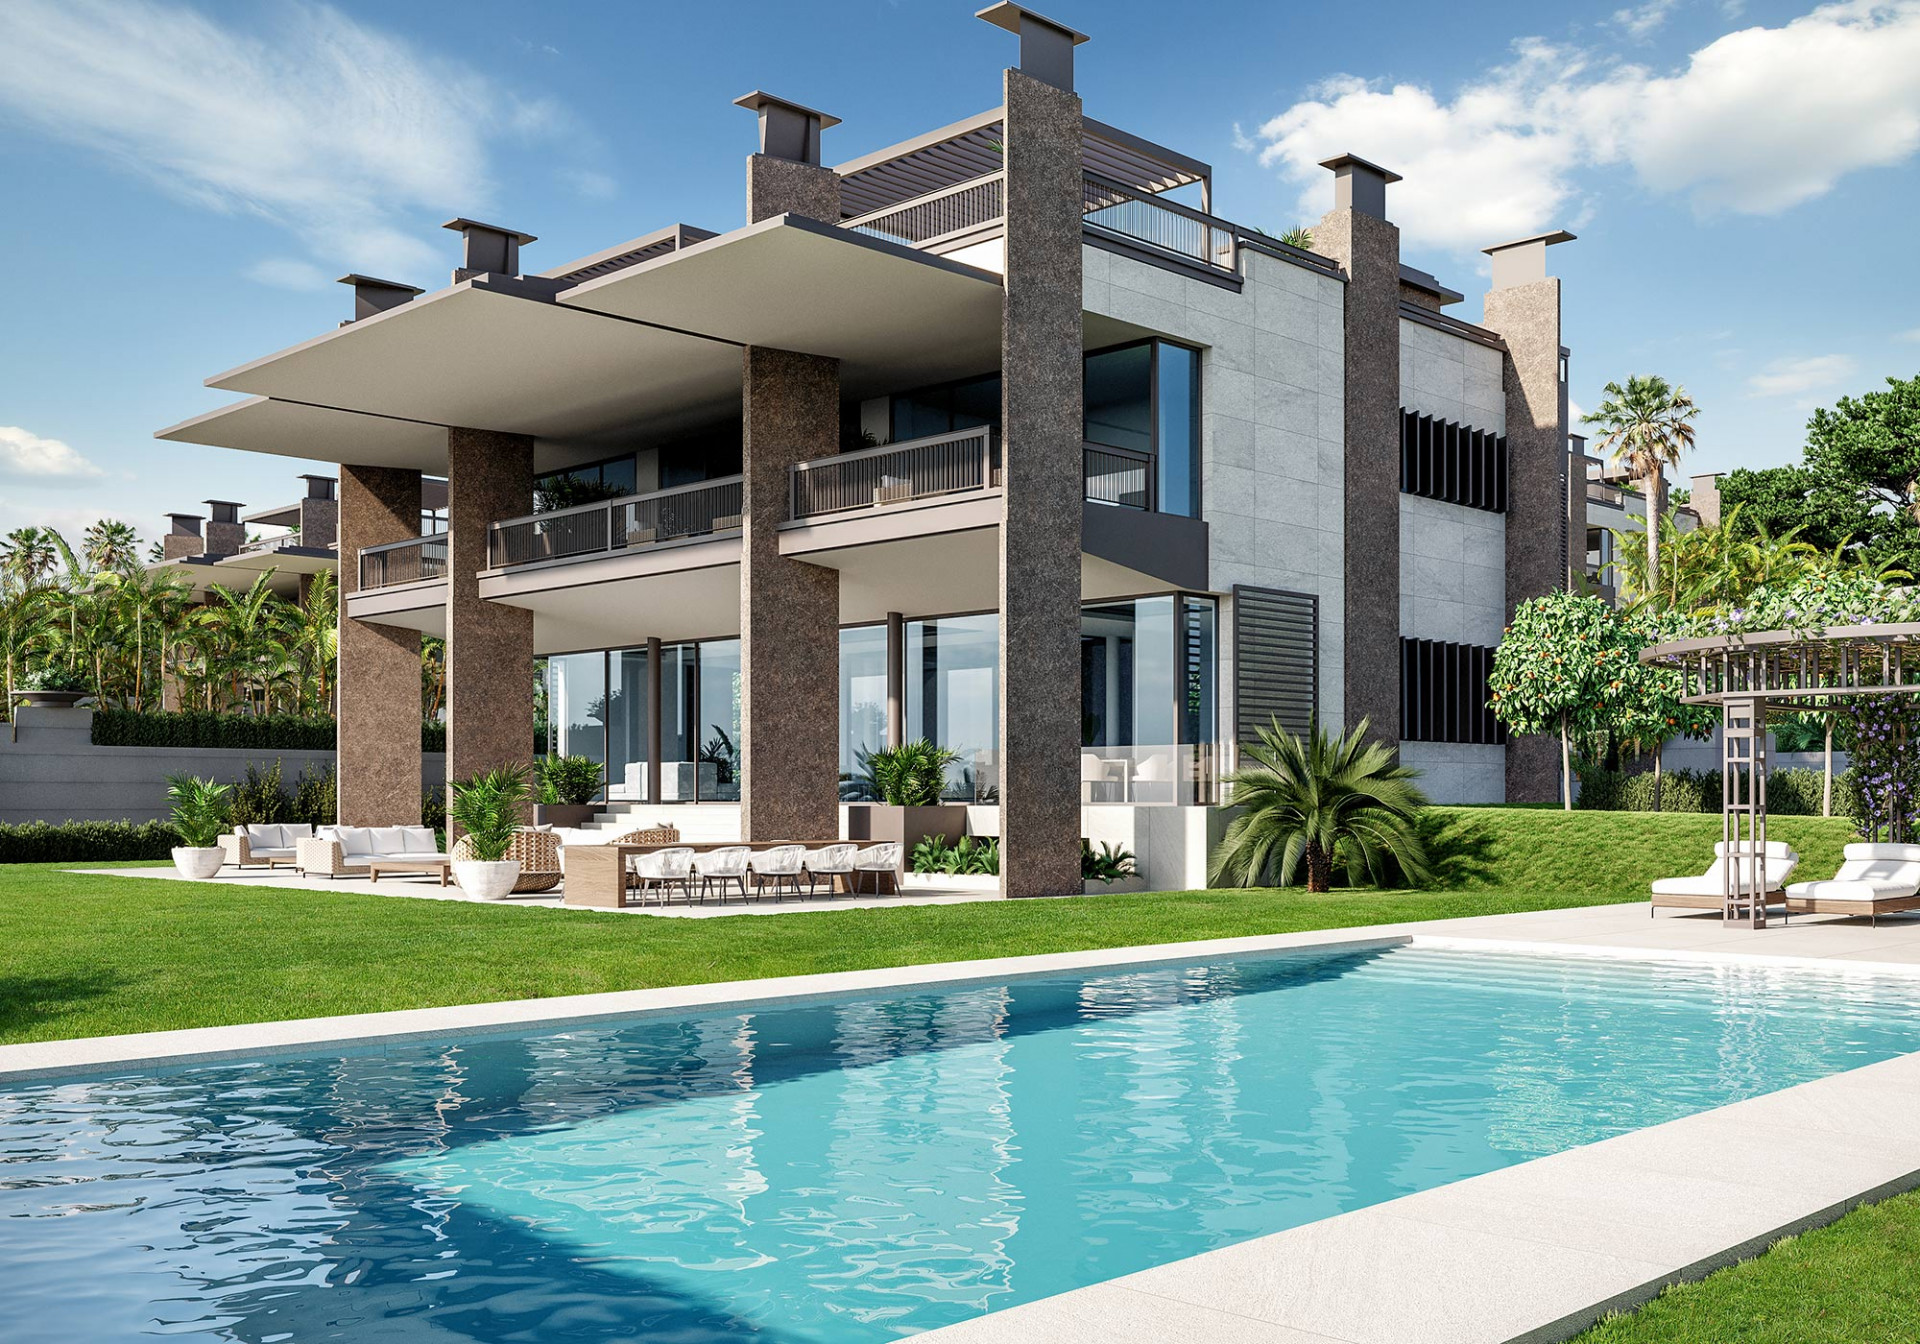 Exclusive six bedroom villa with solarium with panoramic views over Puerto Banús in Marbella. | Image 1